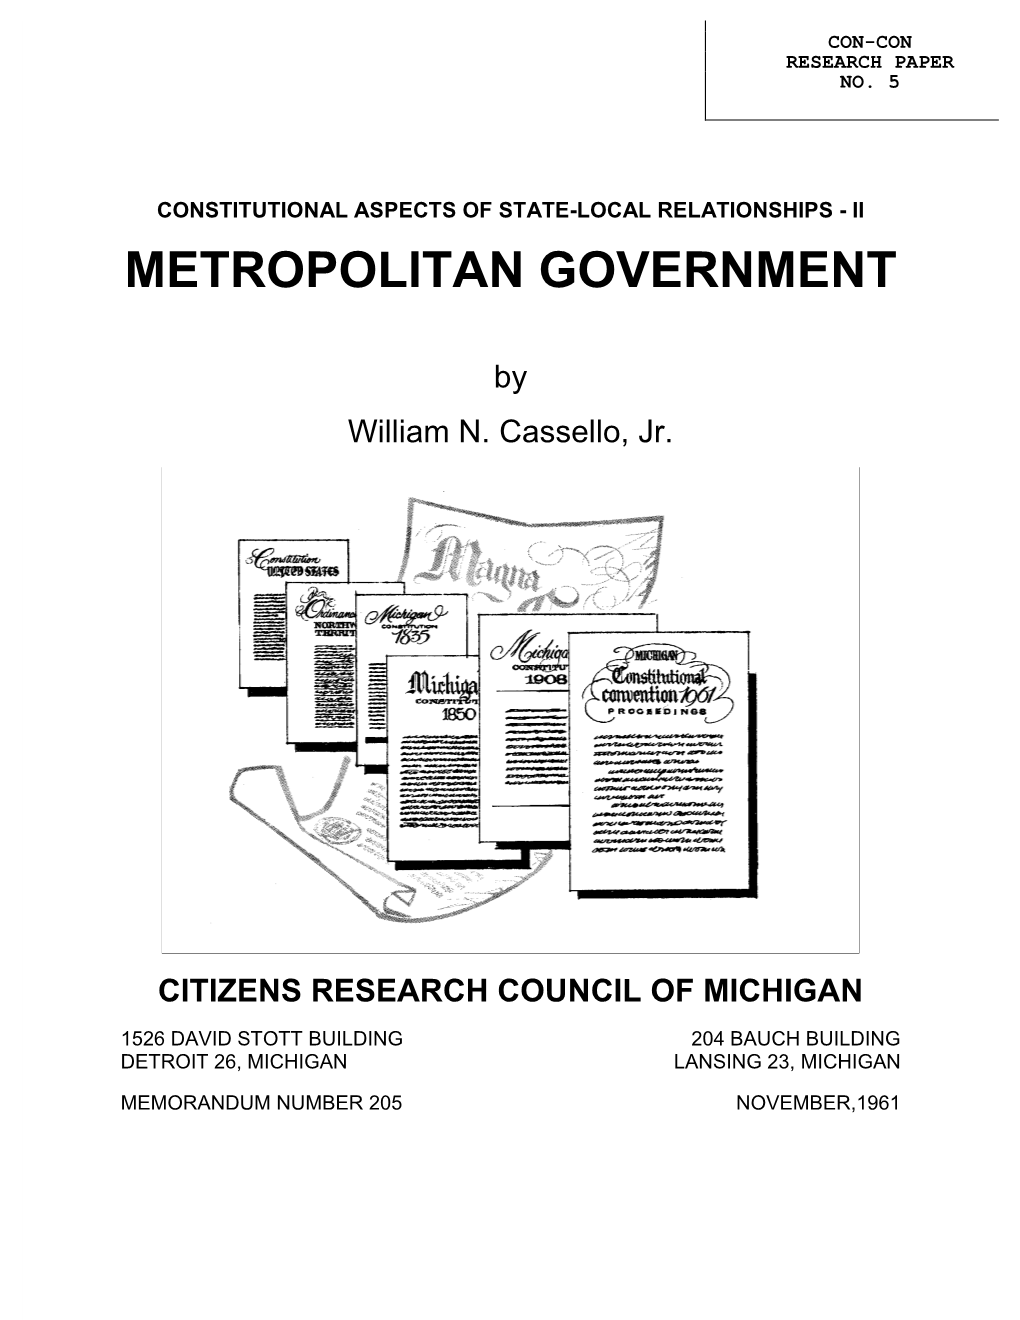 Metropolitan Government